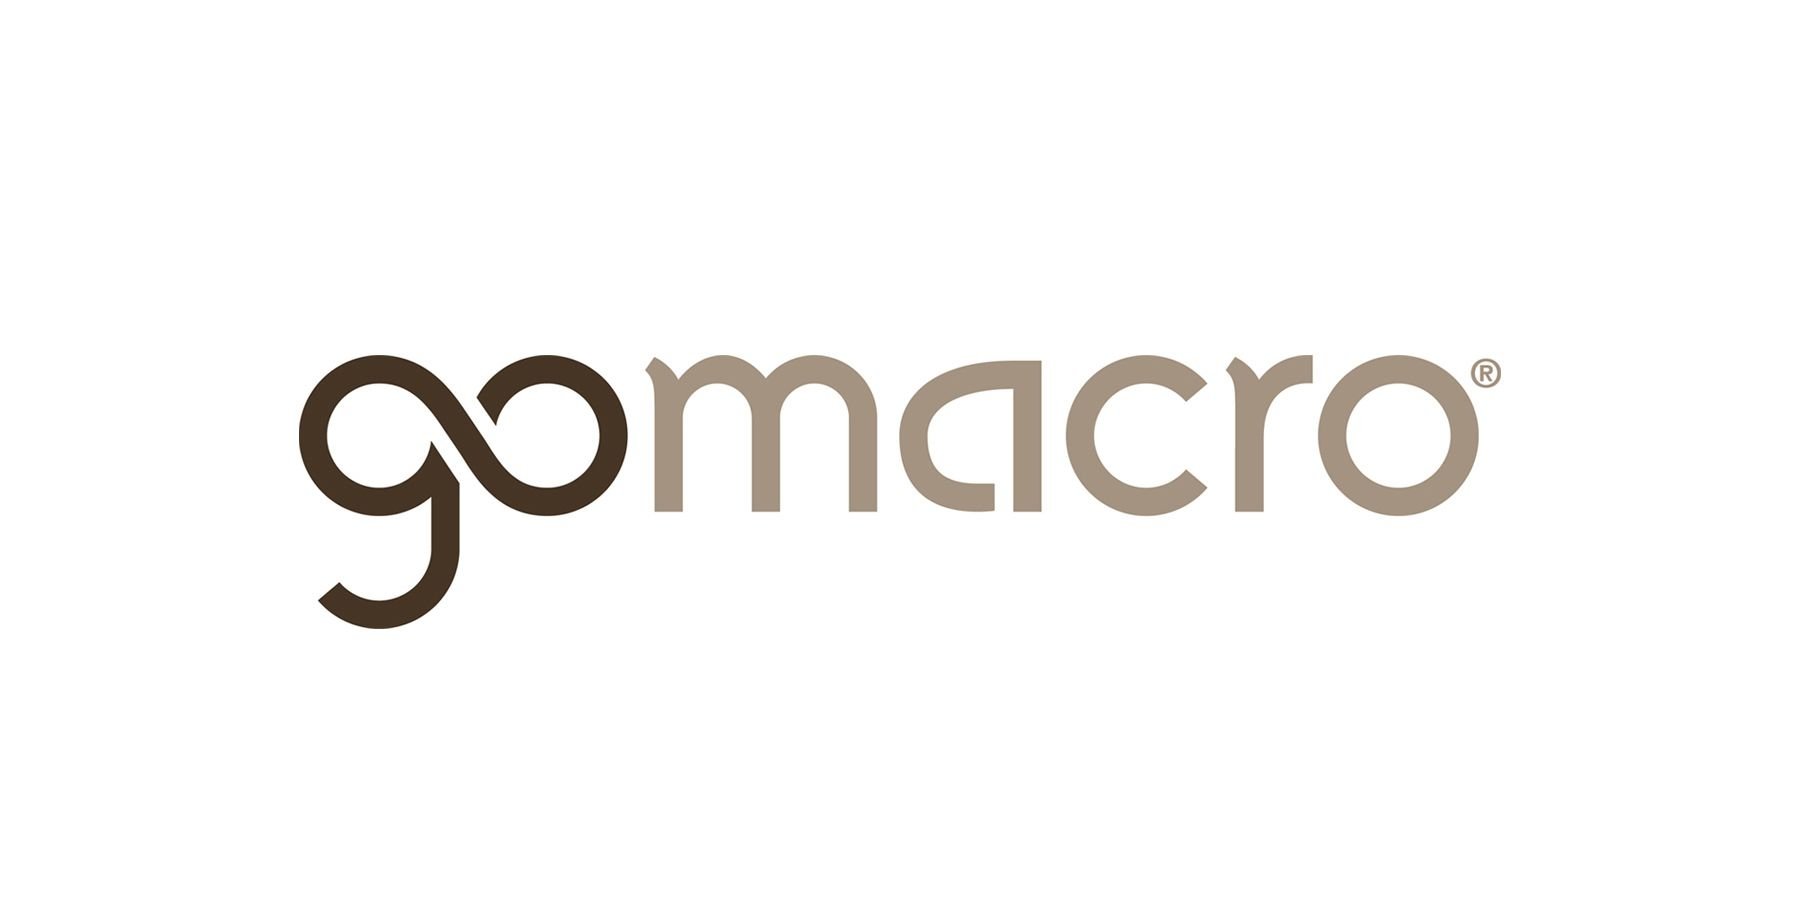 Macroar_logo_1800x900_5c7450667c.jpg